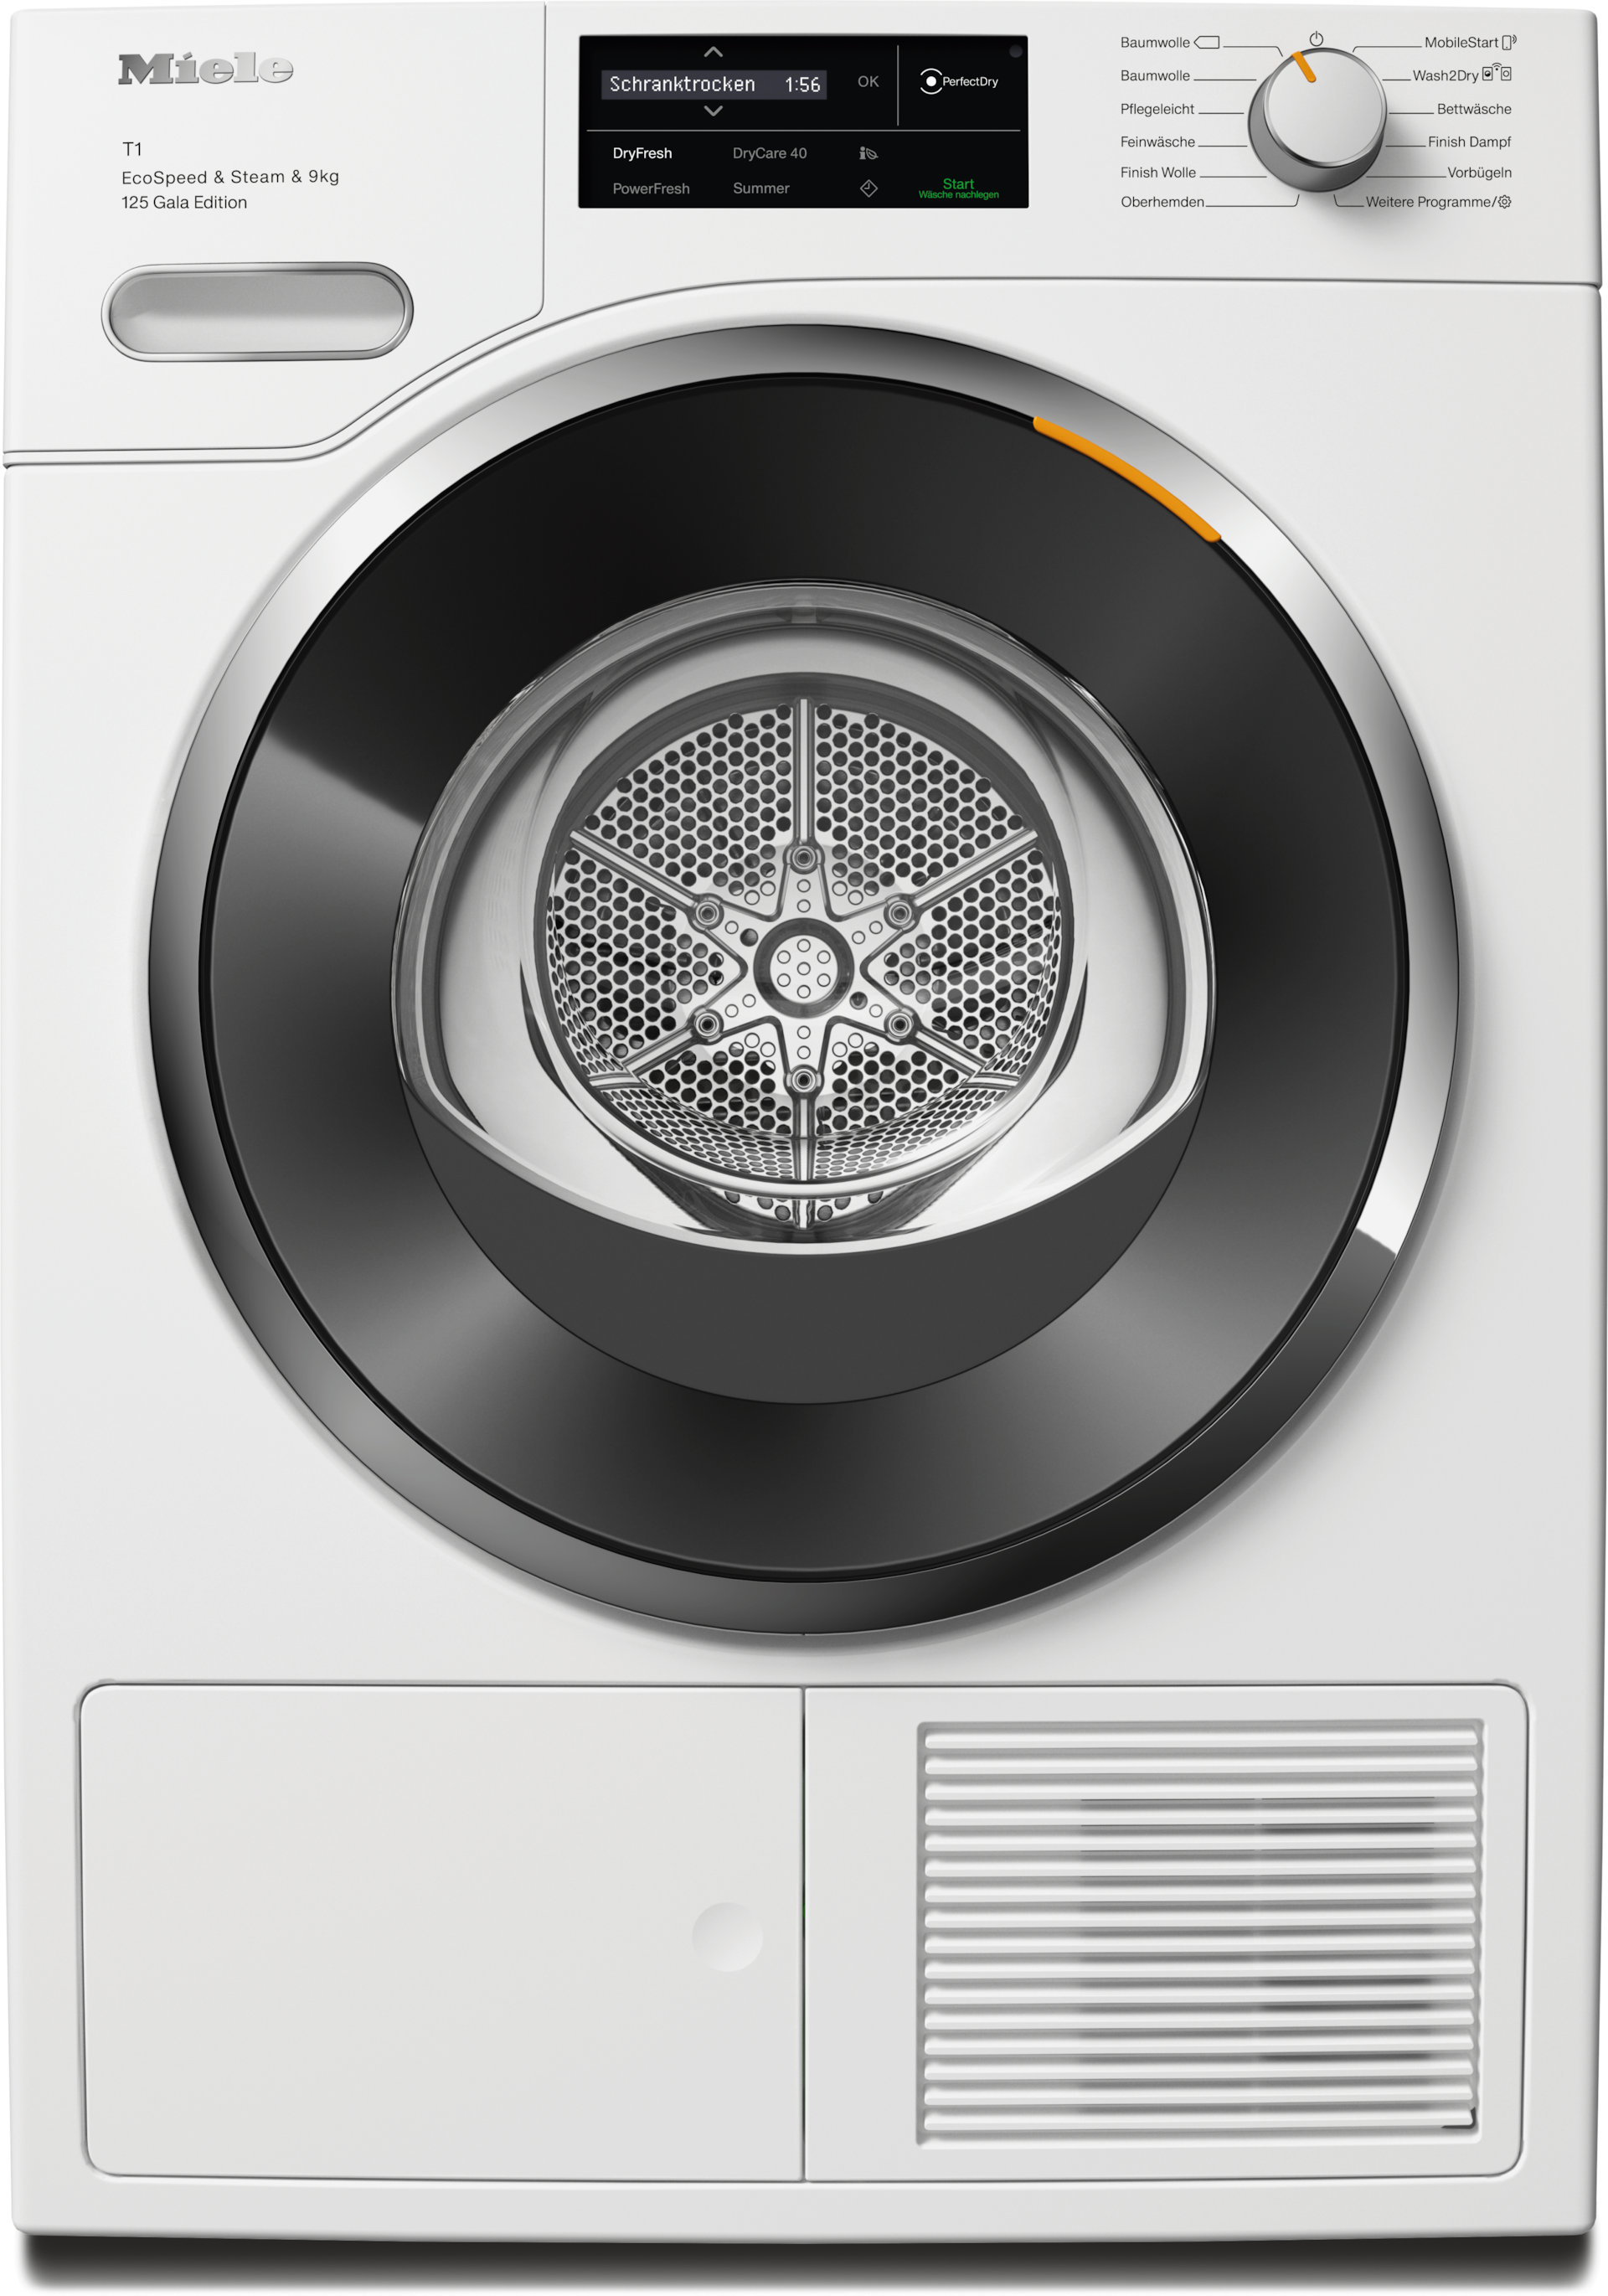 Tumble dryers - TWL680WP 125 Gala Edition Lopoč bijela - 1